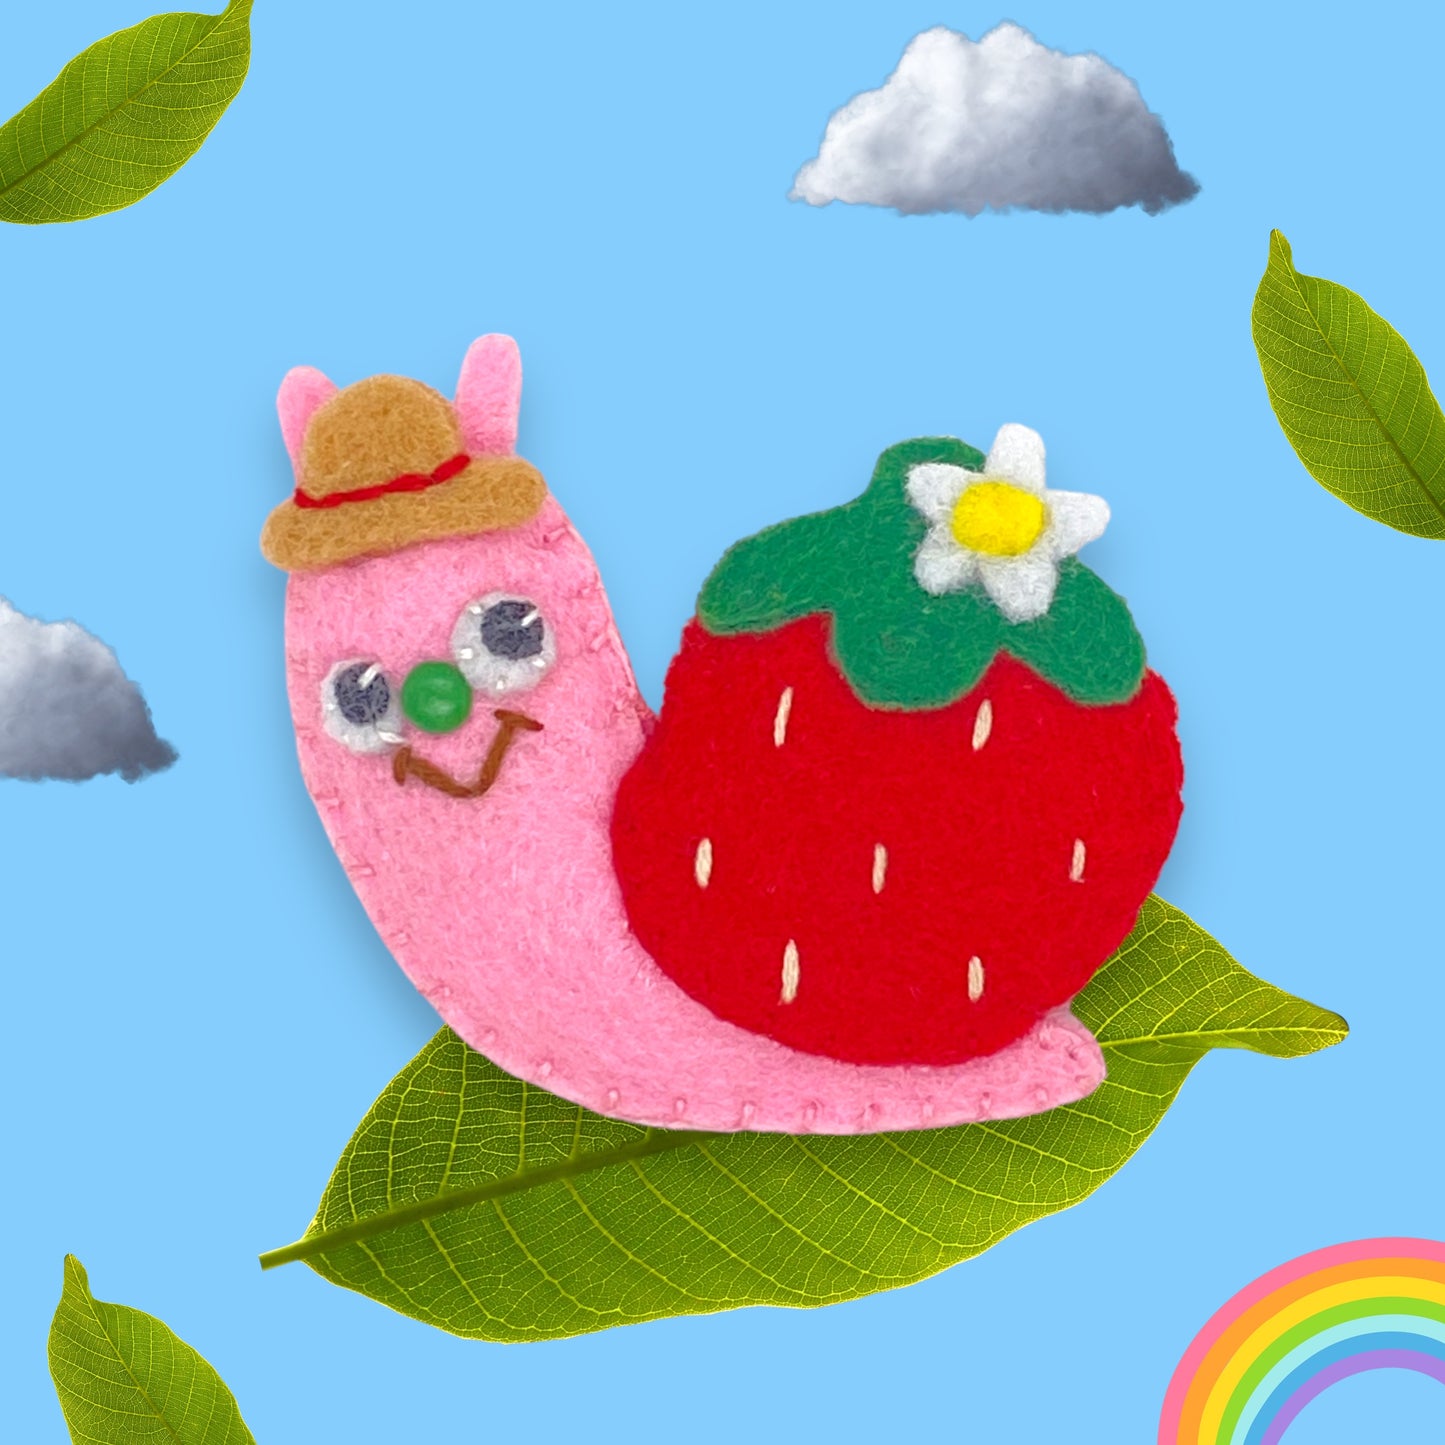 strawberry snail pin/brooch